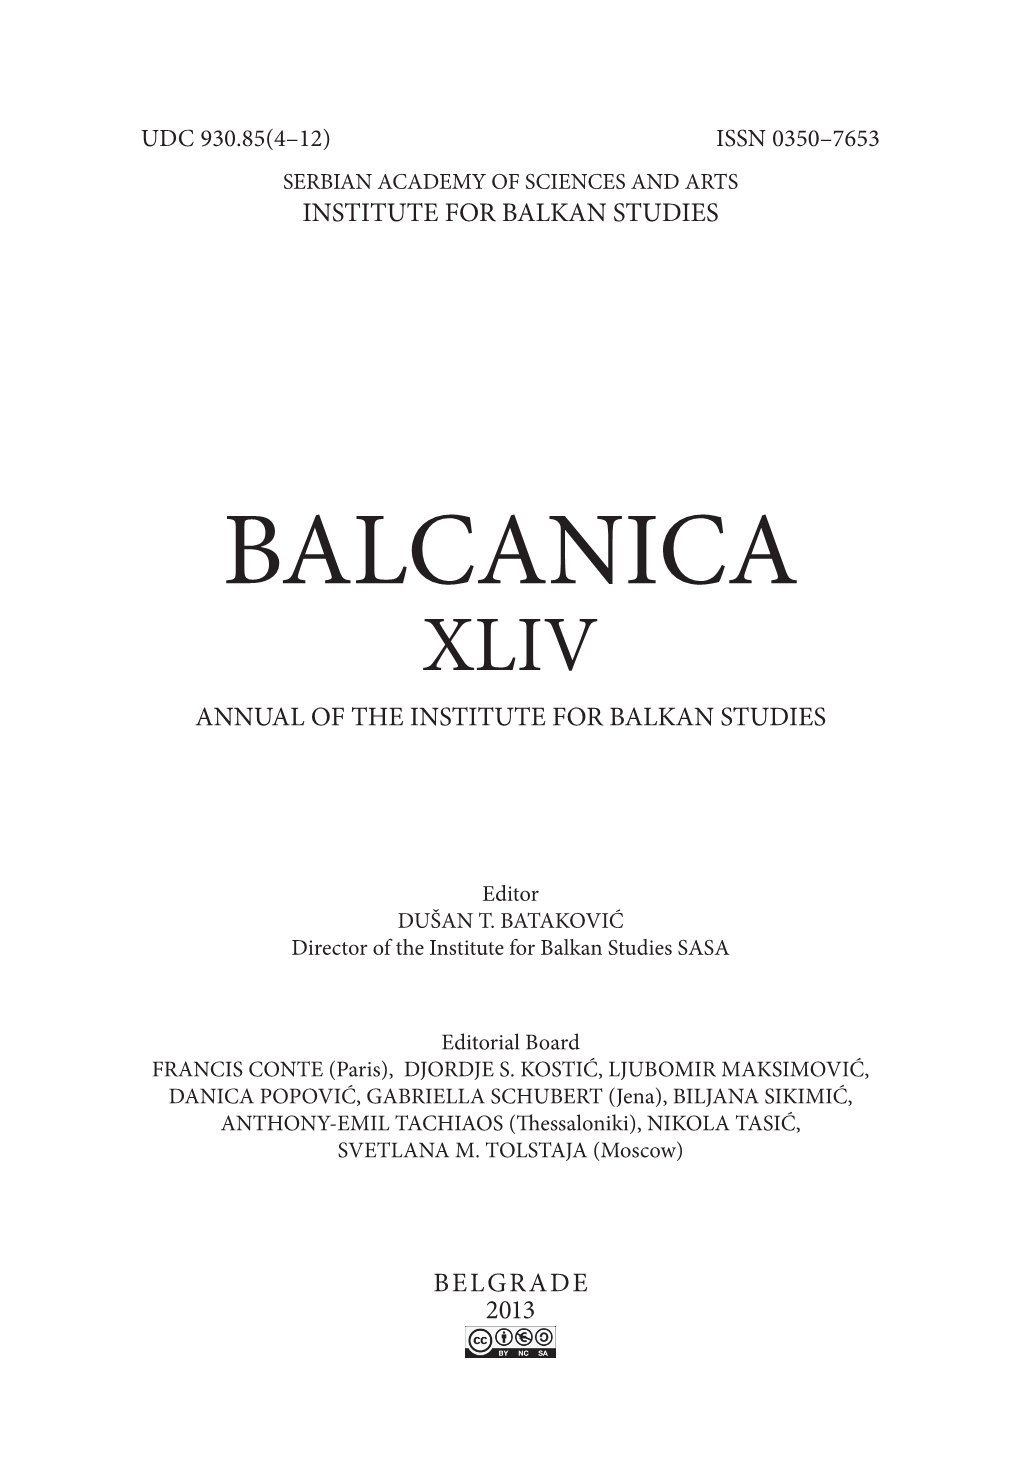 Balcanica Xliv Annual of the Institute for Balkan Studies